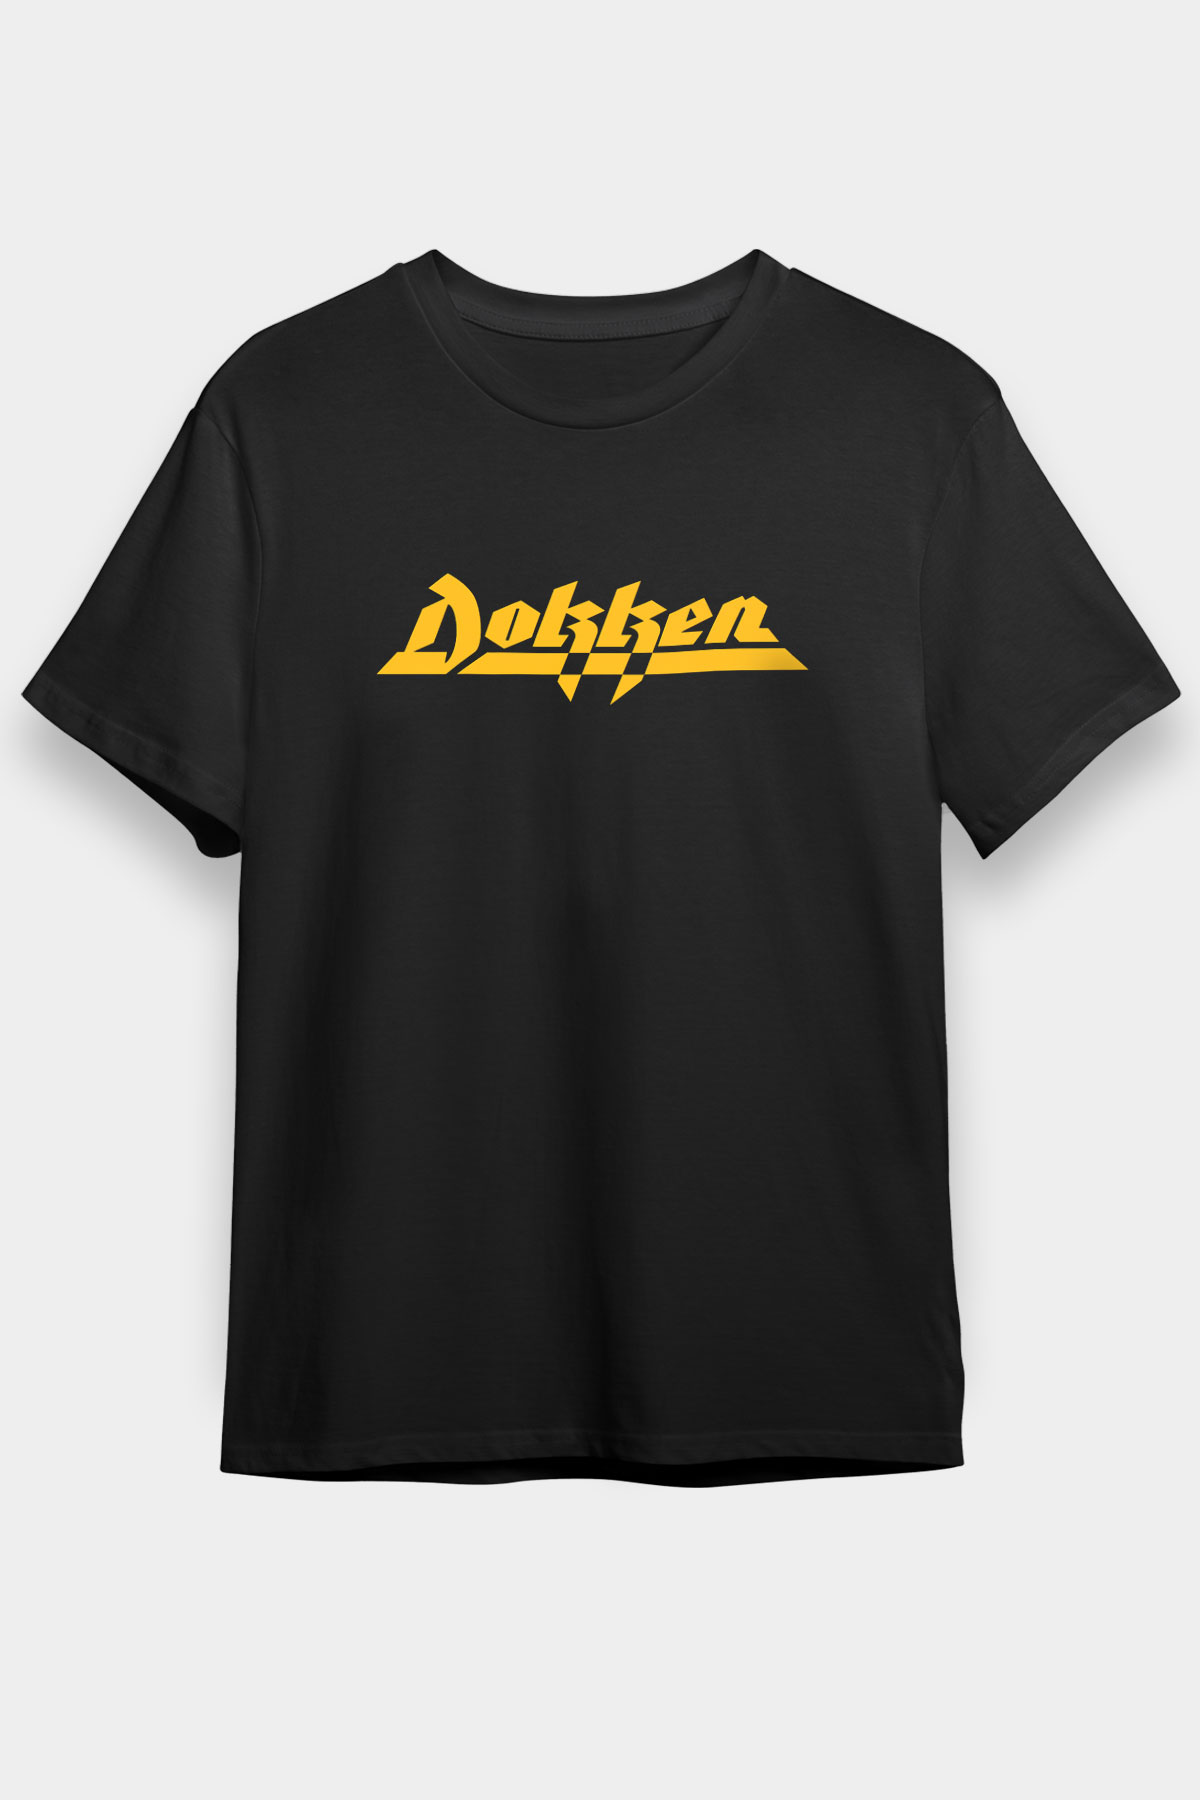 Dokken  T shirt,Music Band,Unisex Tshirt 20/